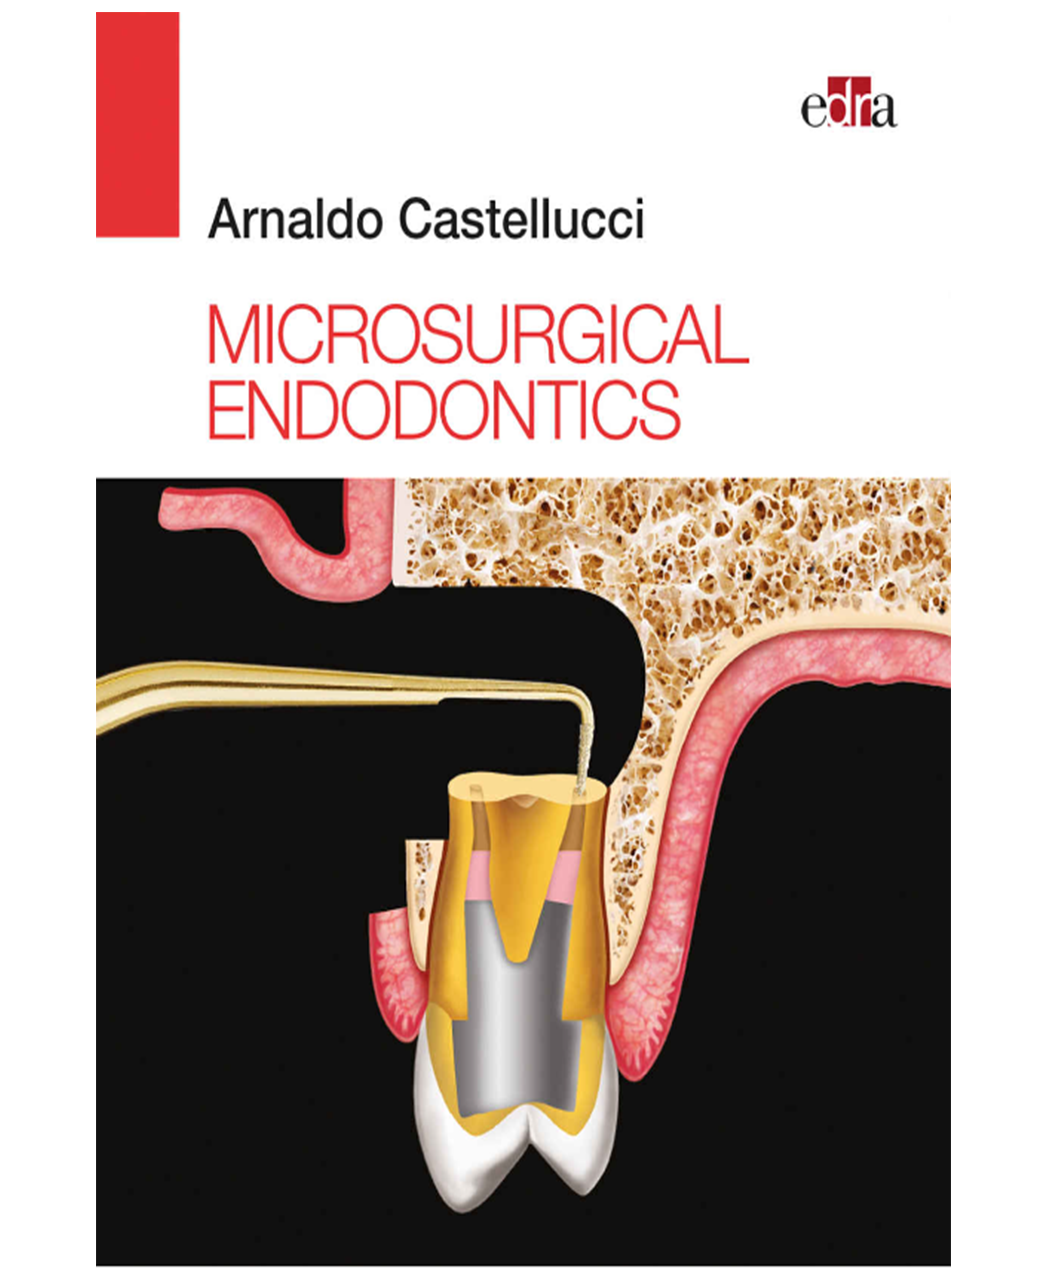 Microsurgical Endodontics